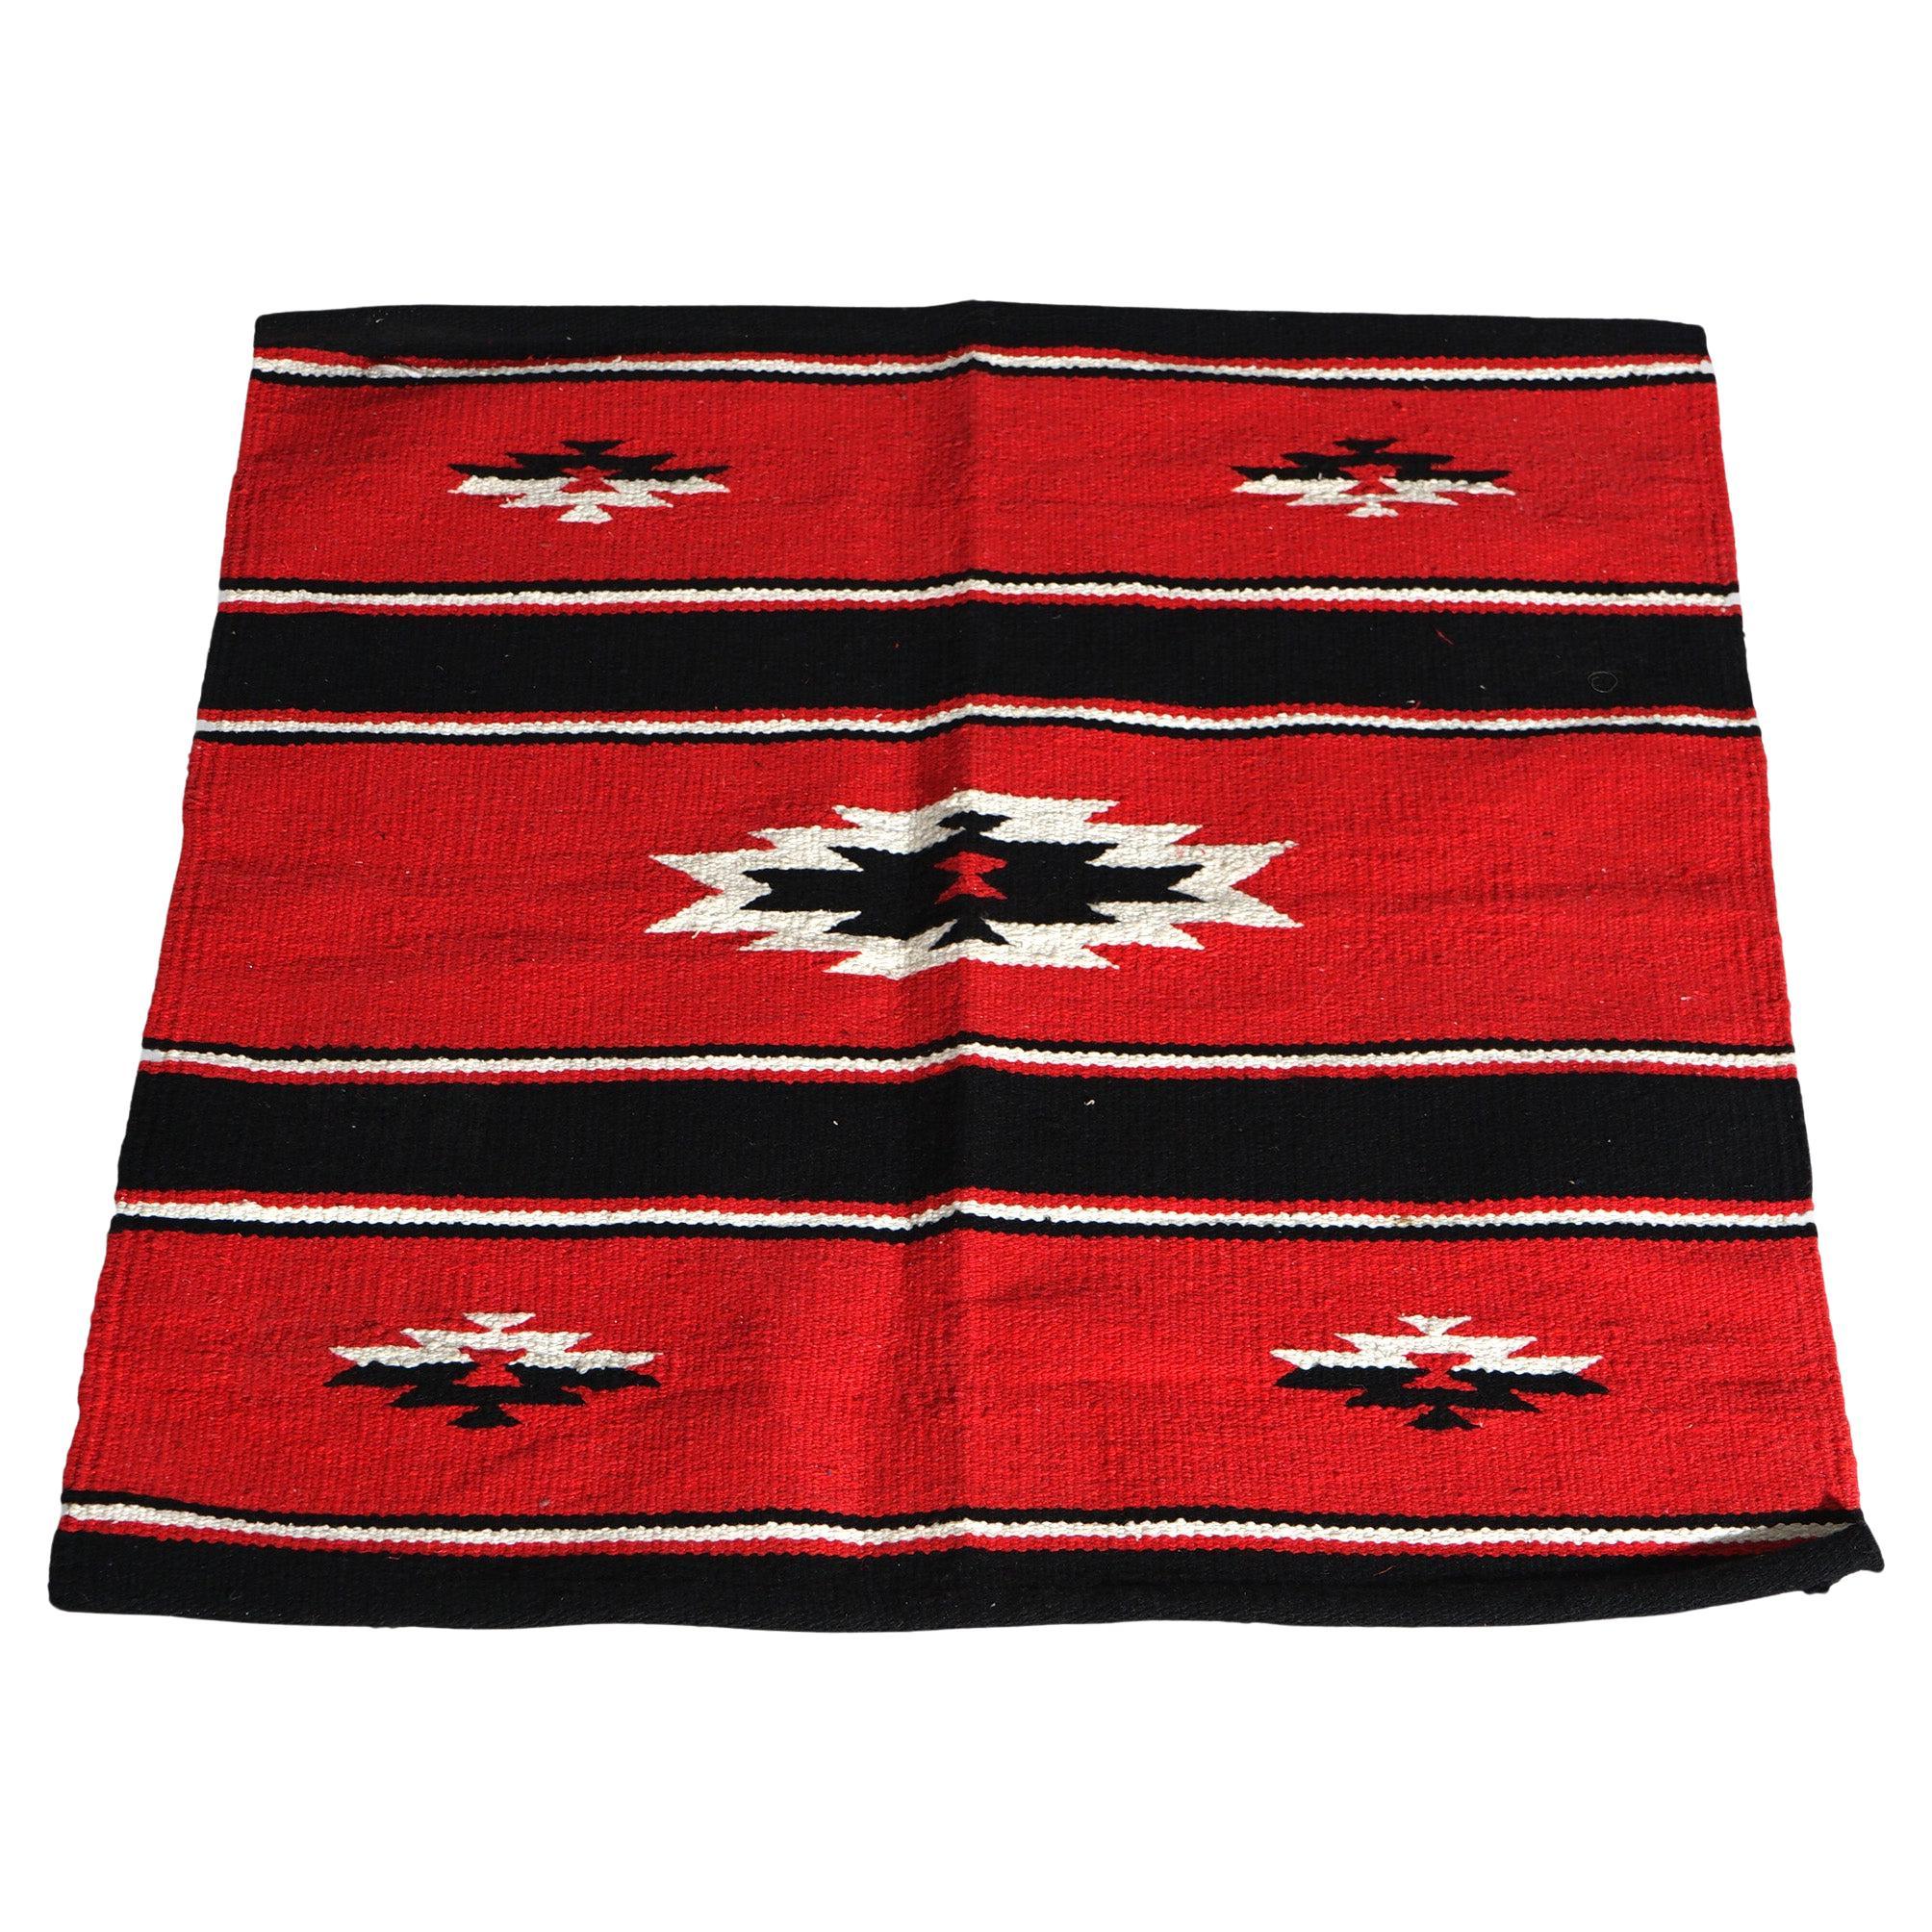 Two Southwest Navajo Native American Indian Design Wool Rugs, Red & Black, Circa 1930

Measure - 30.5